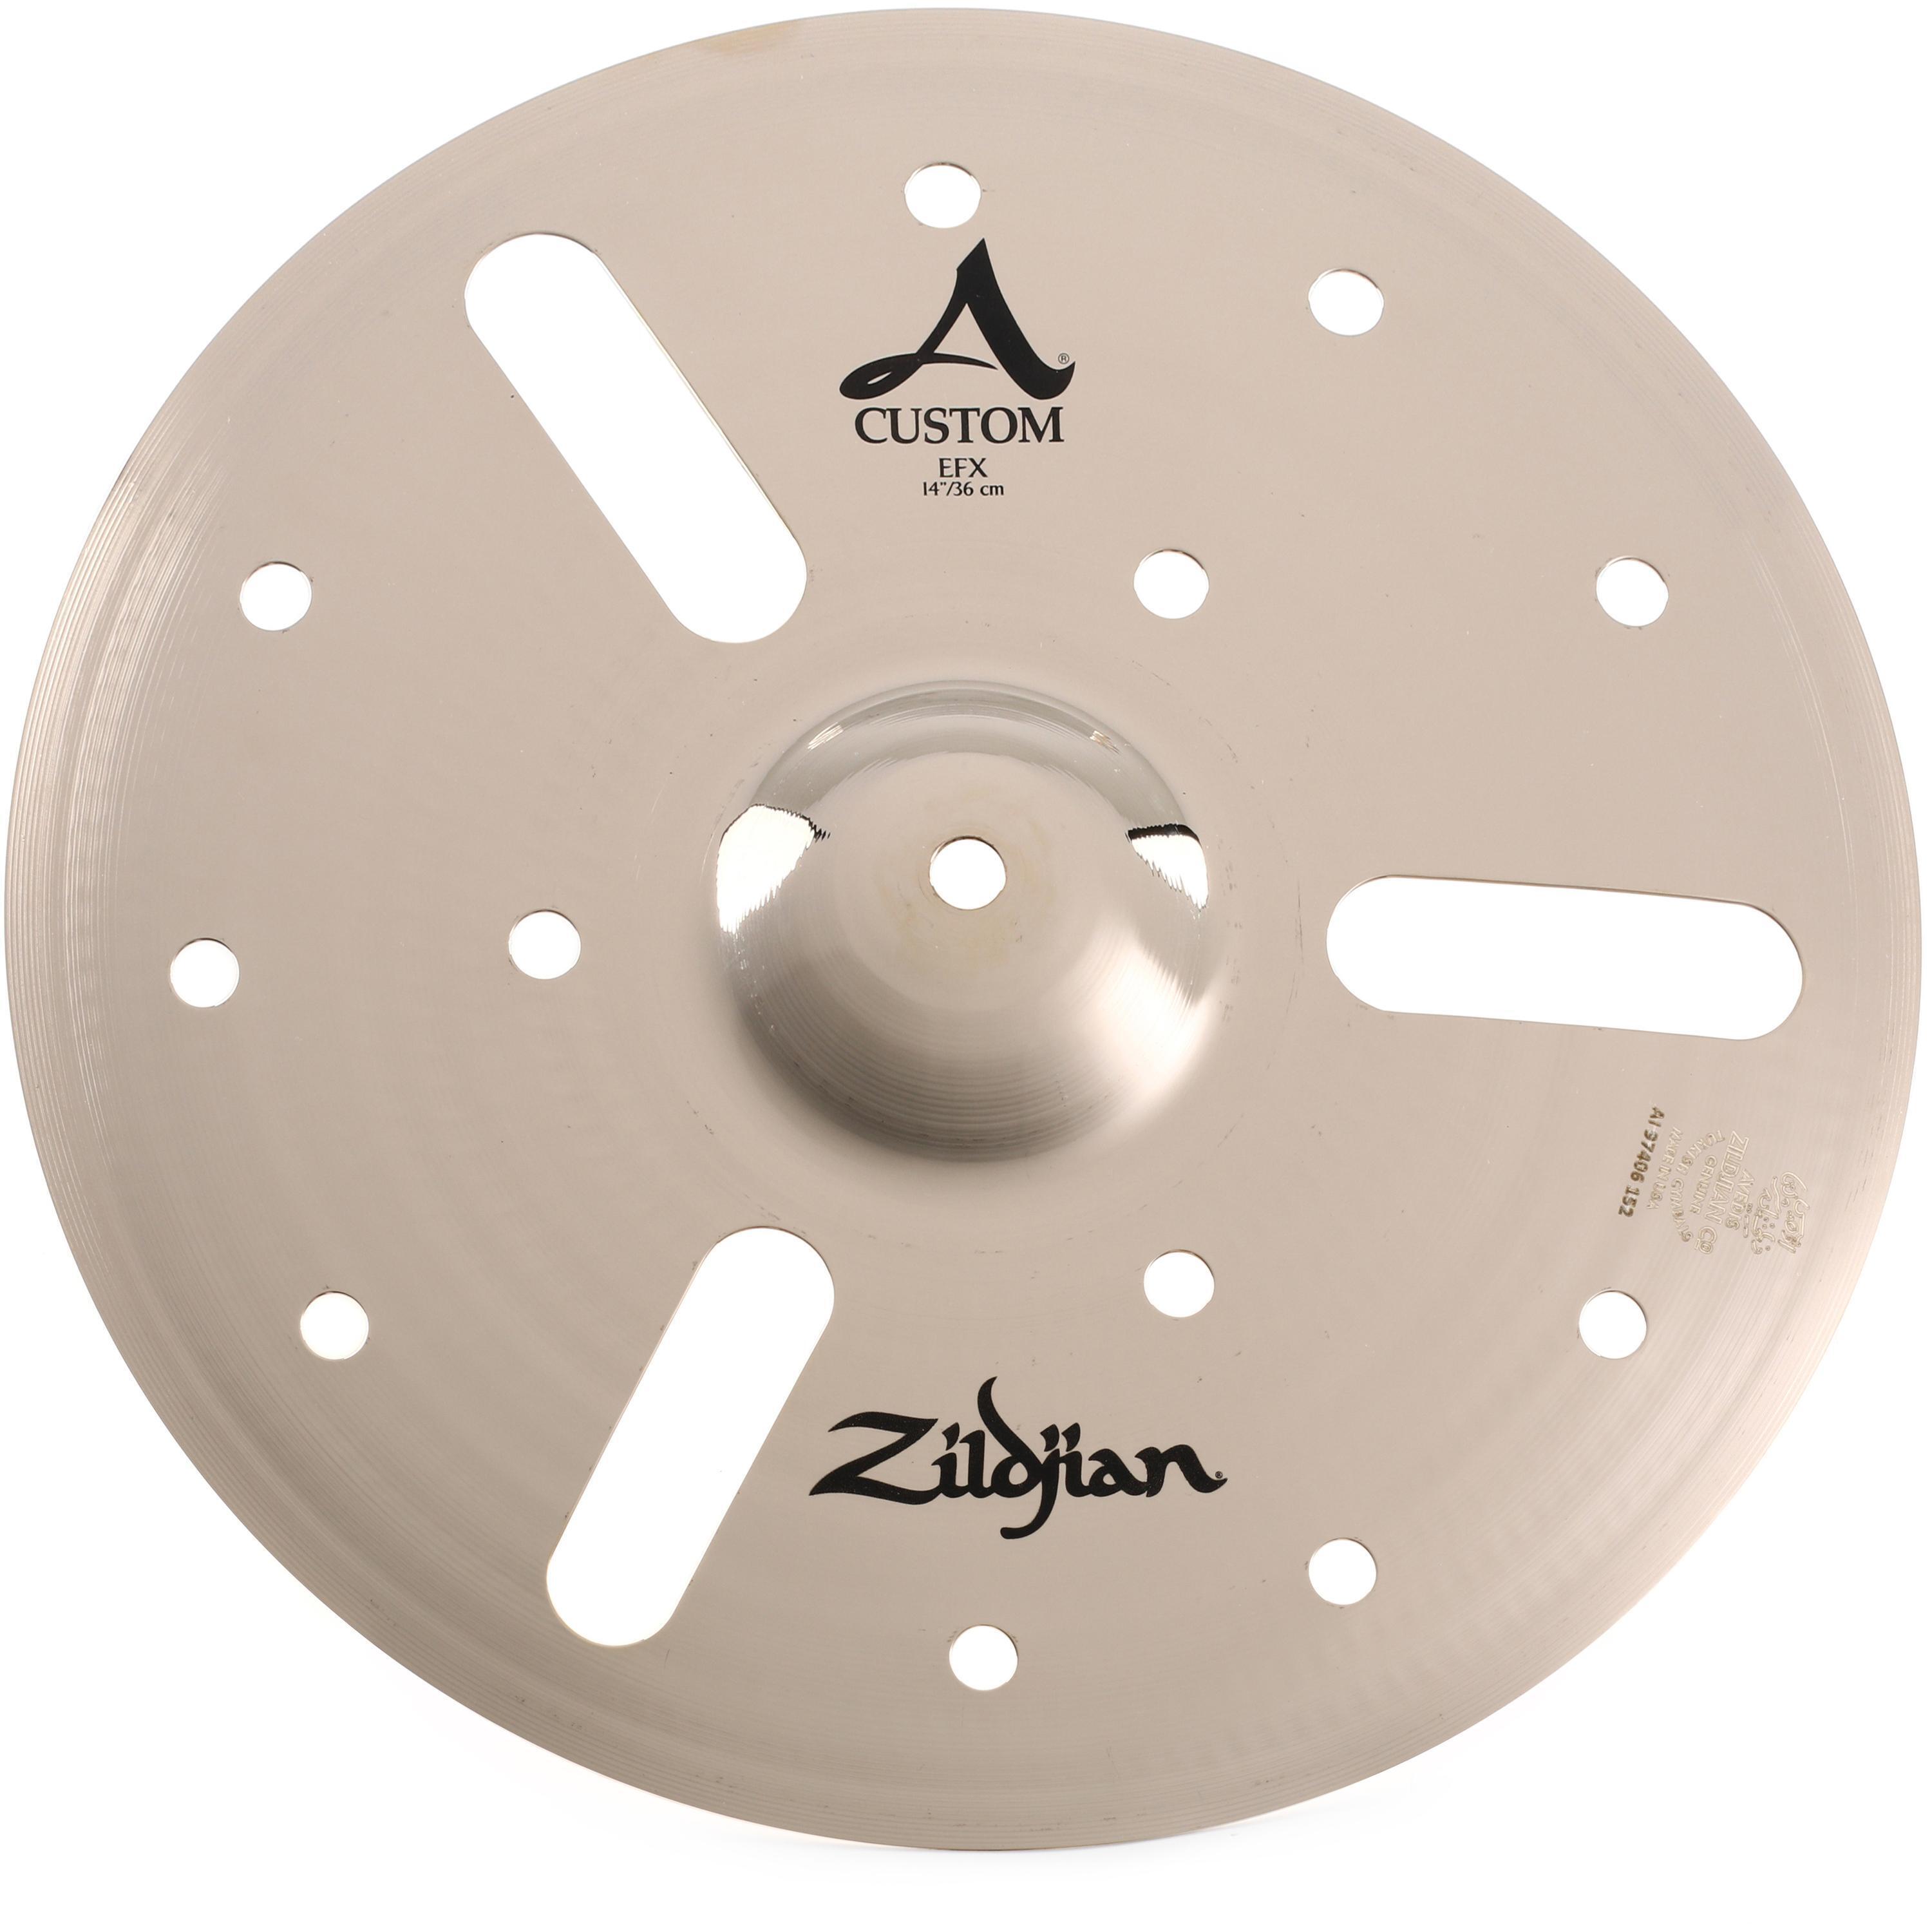 Zildjian 14 inch A Custom EFX Crash Cymbal